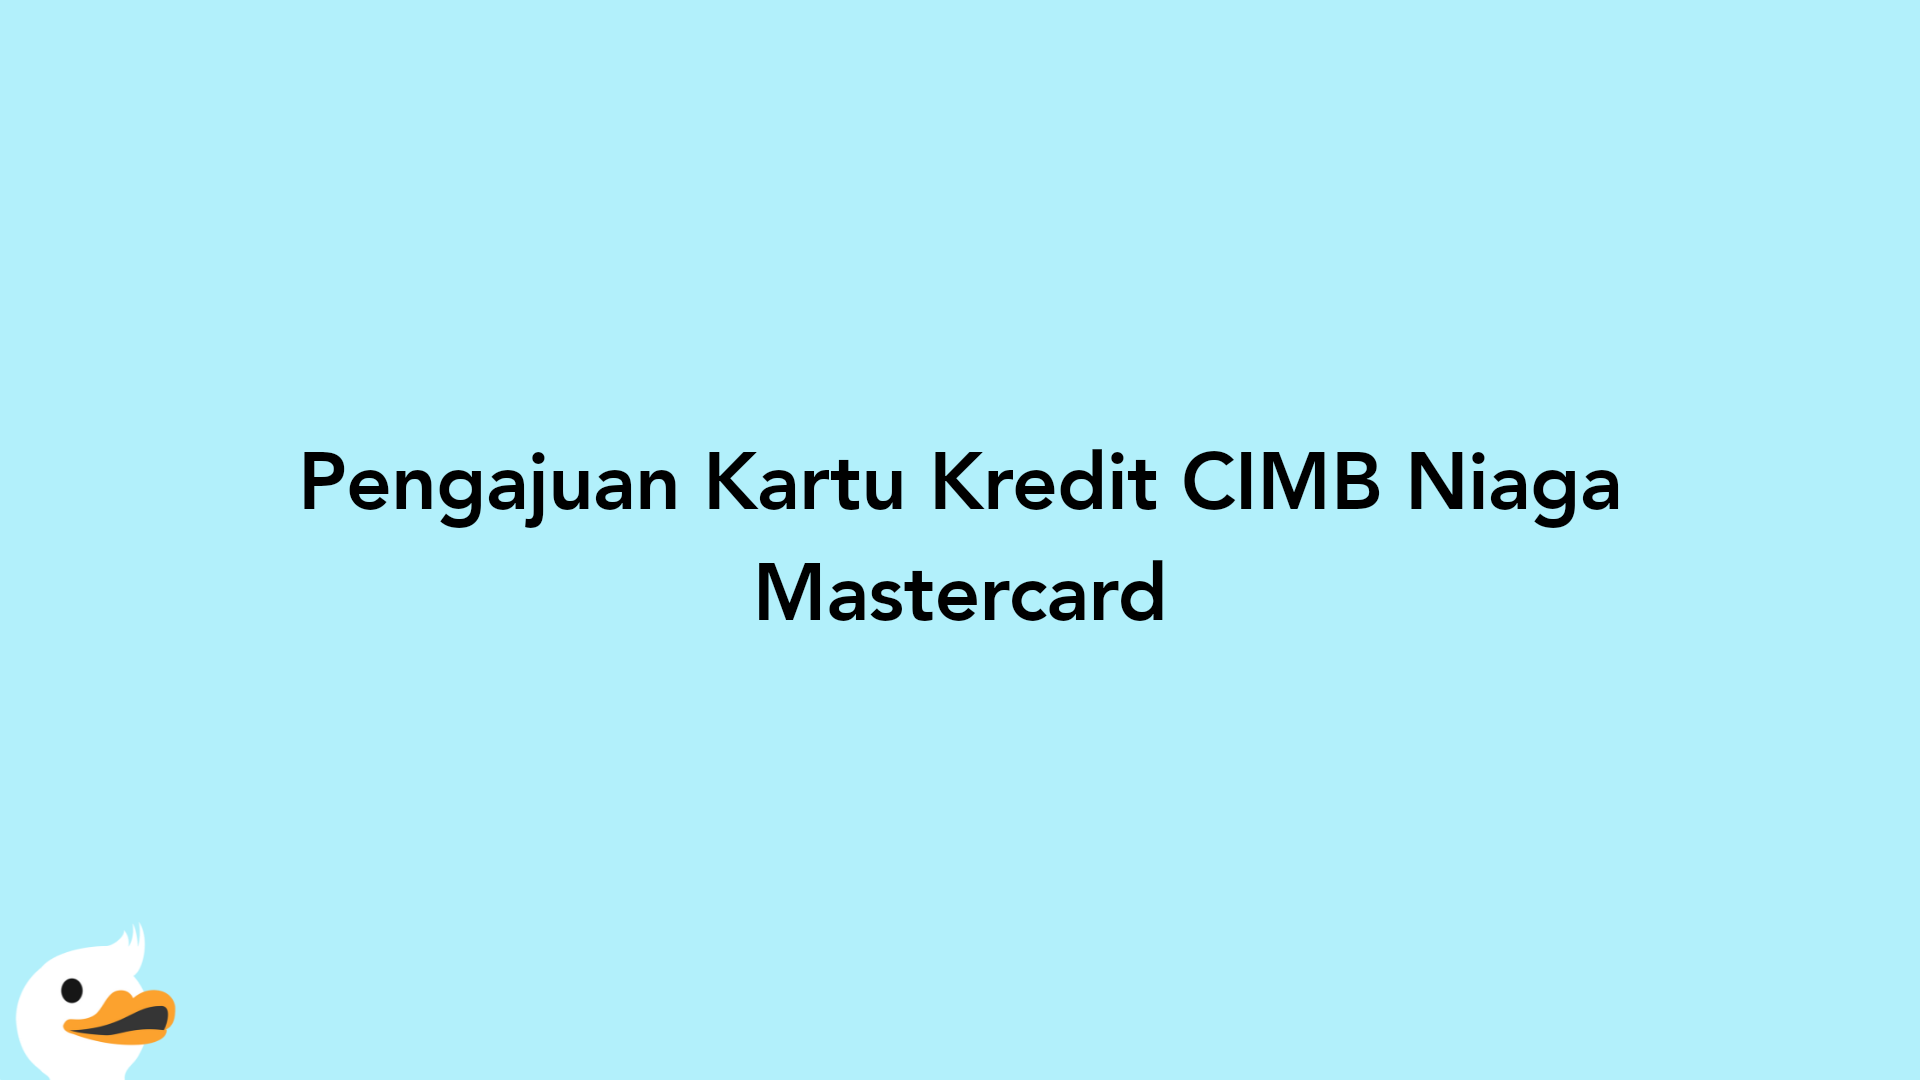 Pengajuan Kartu Kredit CIMB Niaga Mastercard